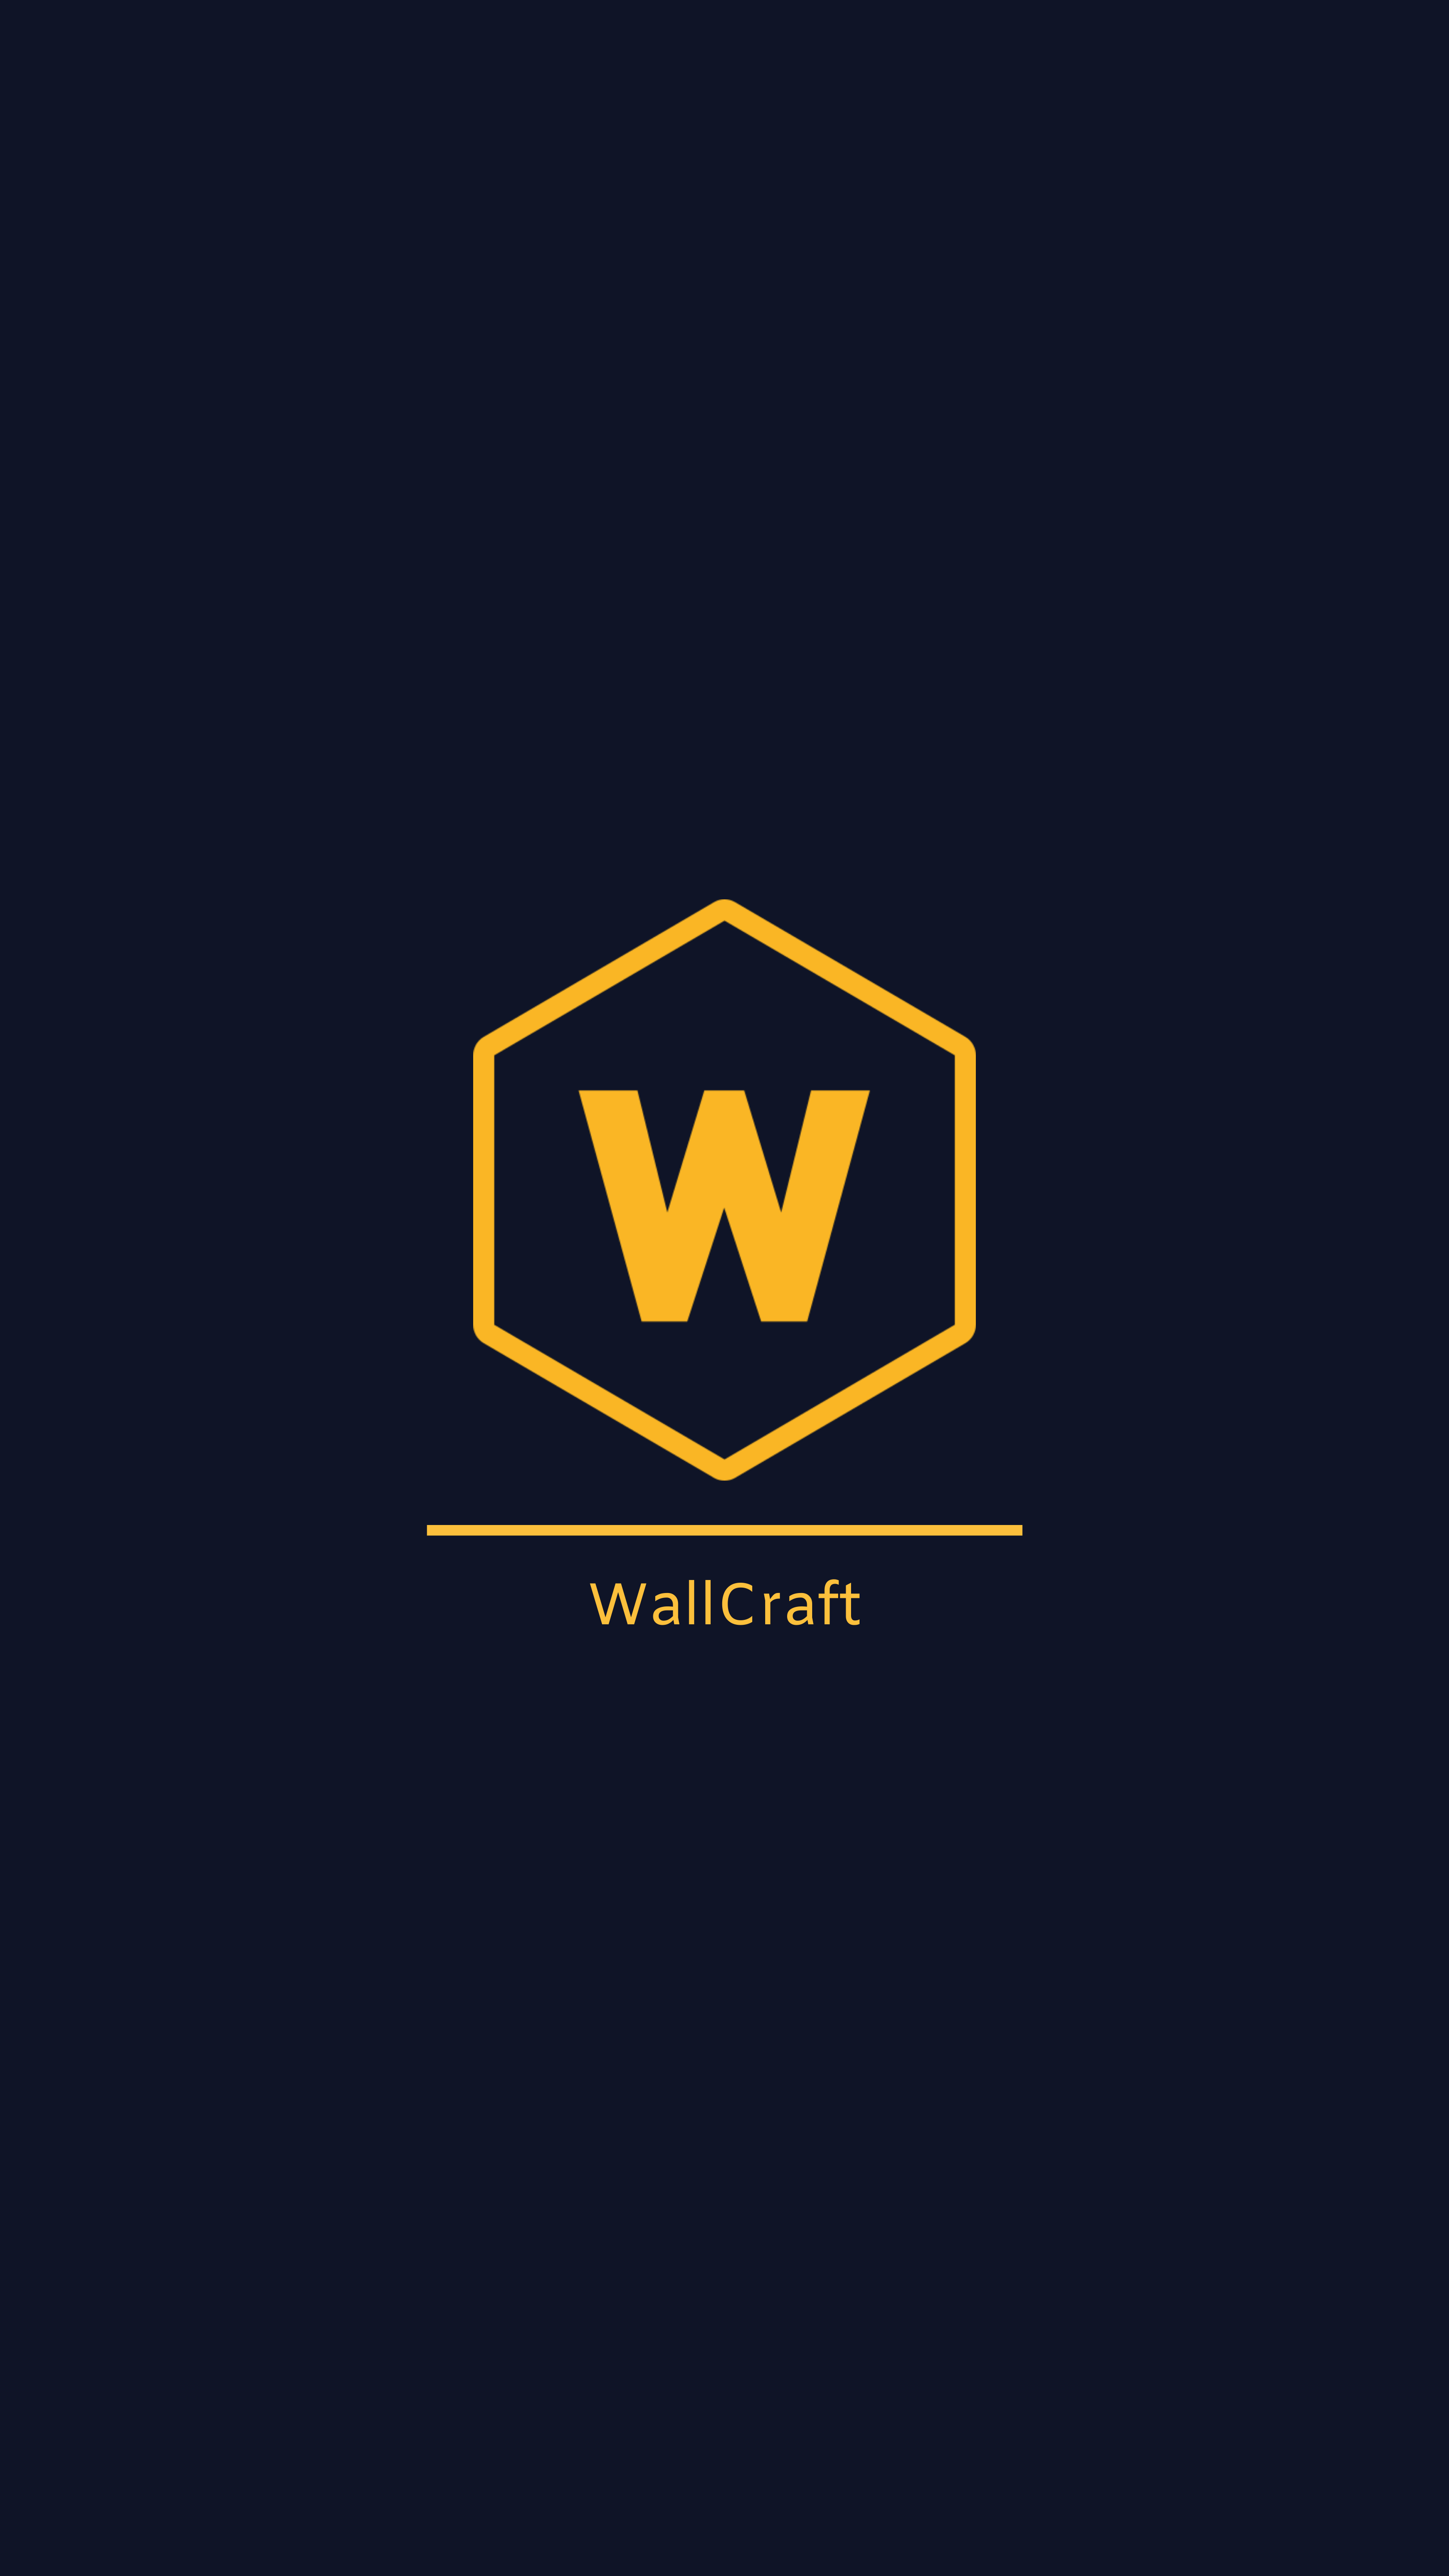 wallcraft, words, inscription, logo, logotype, brand name, brand